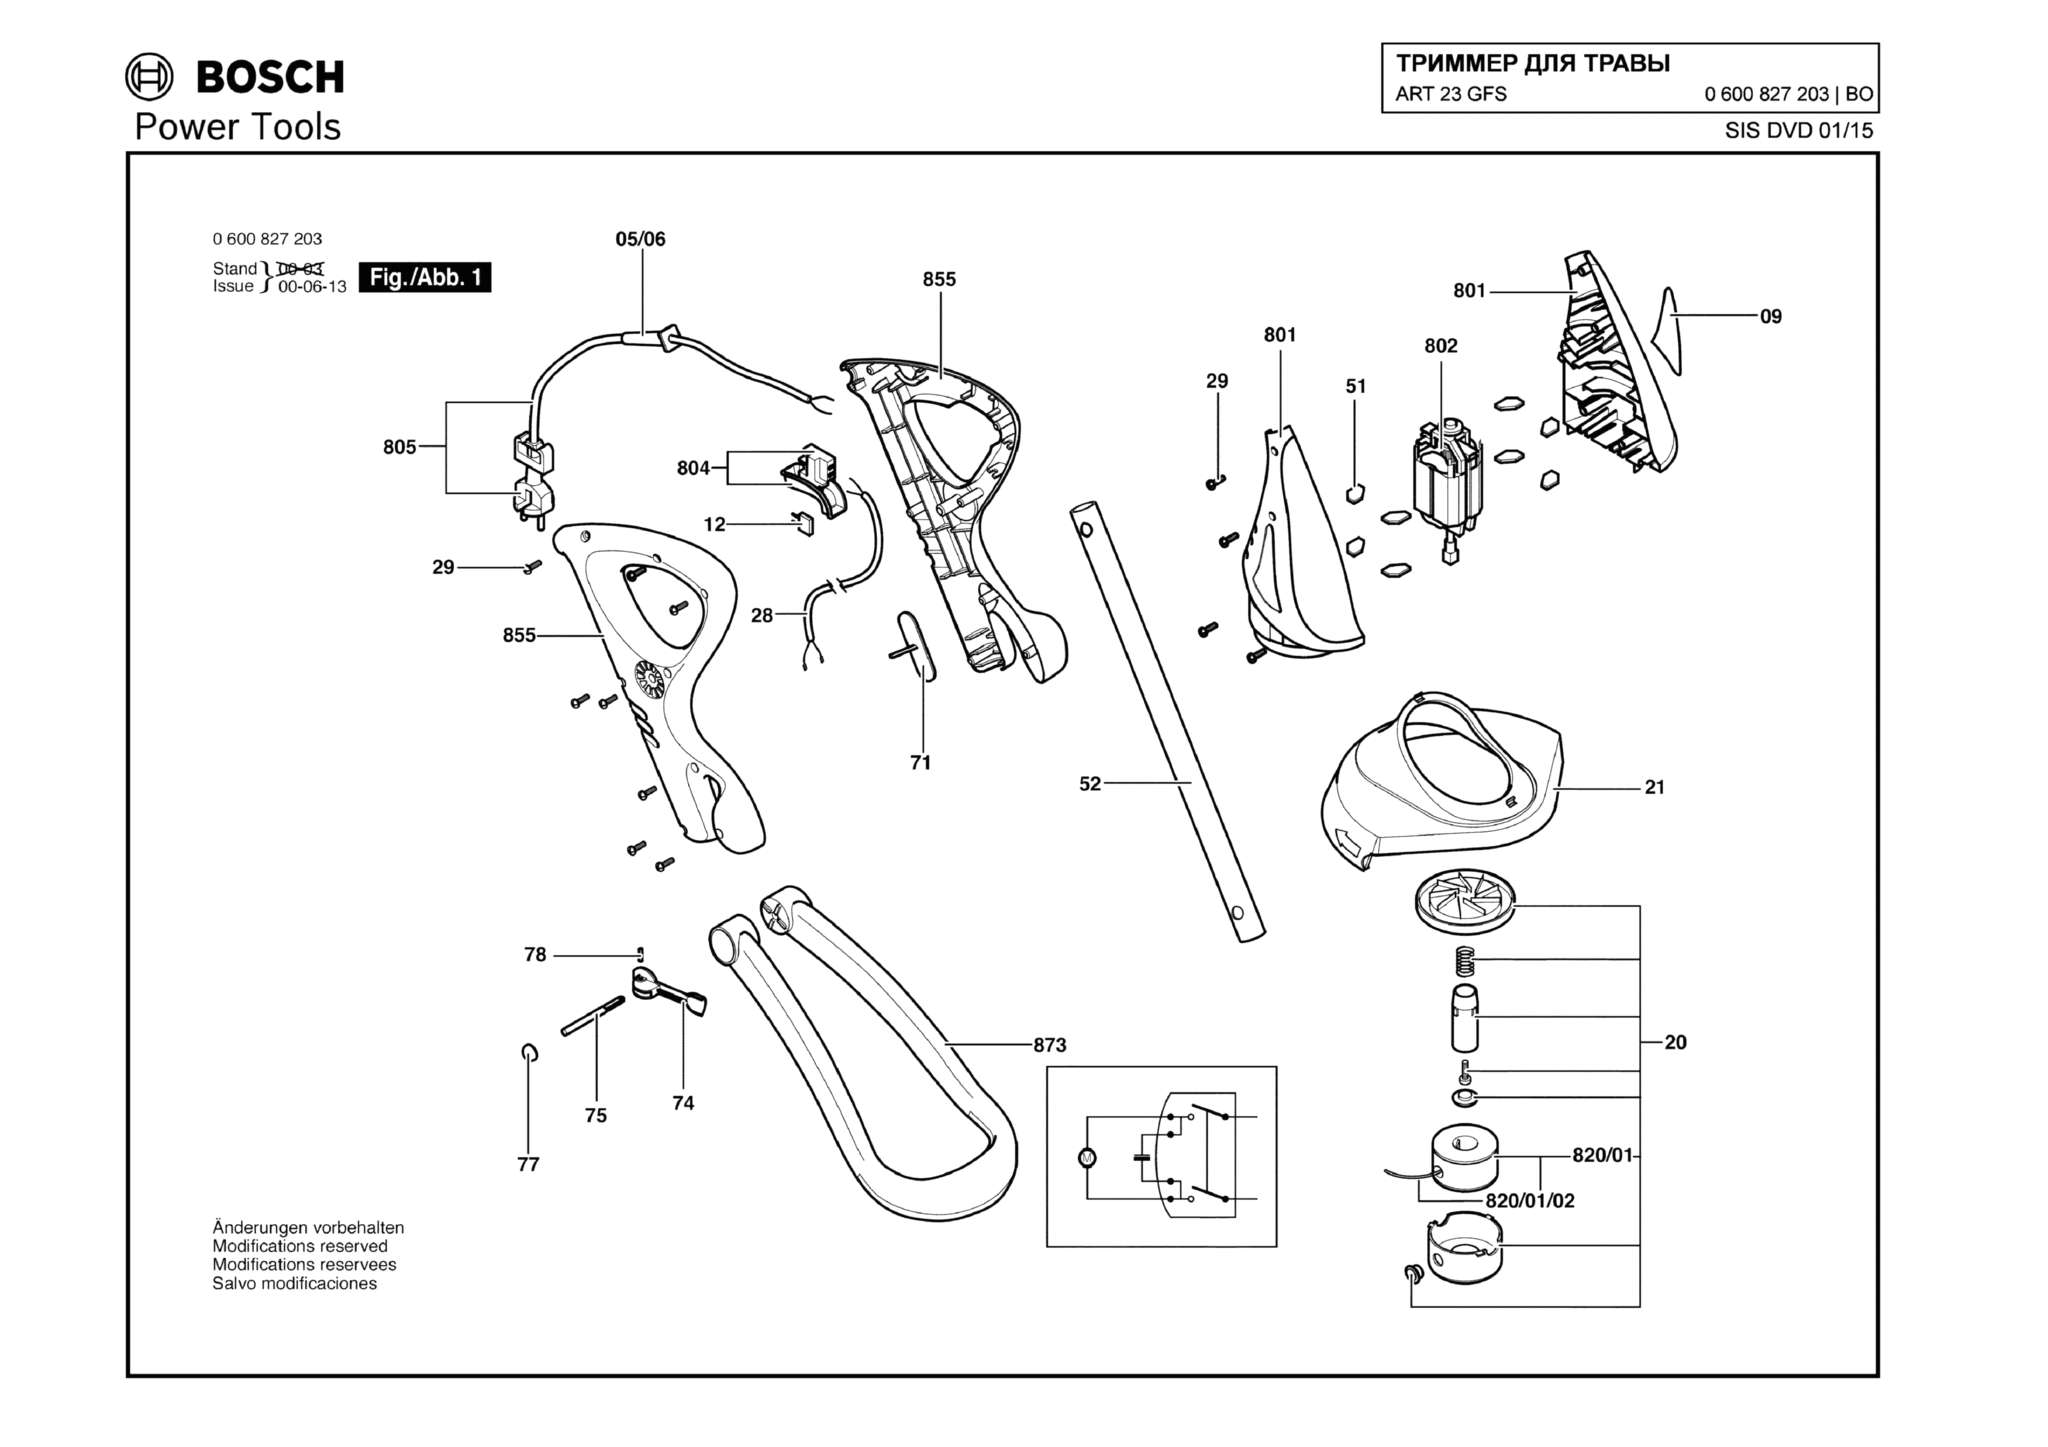 Запчасти, схема и деталировка Bosch ART 23 GFS (ТИП 0600827203)